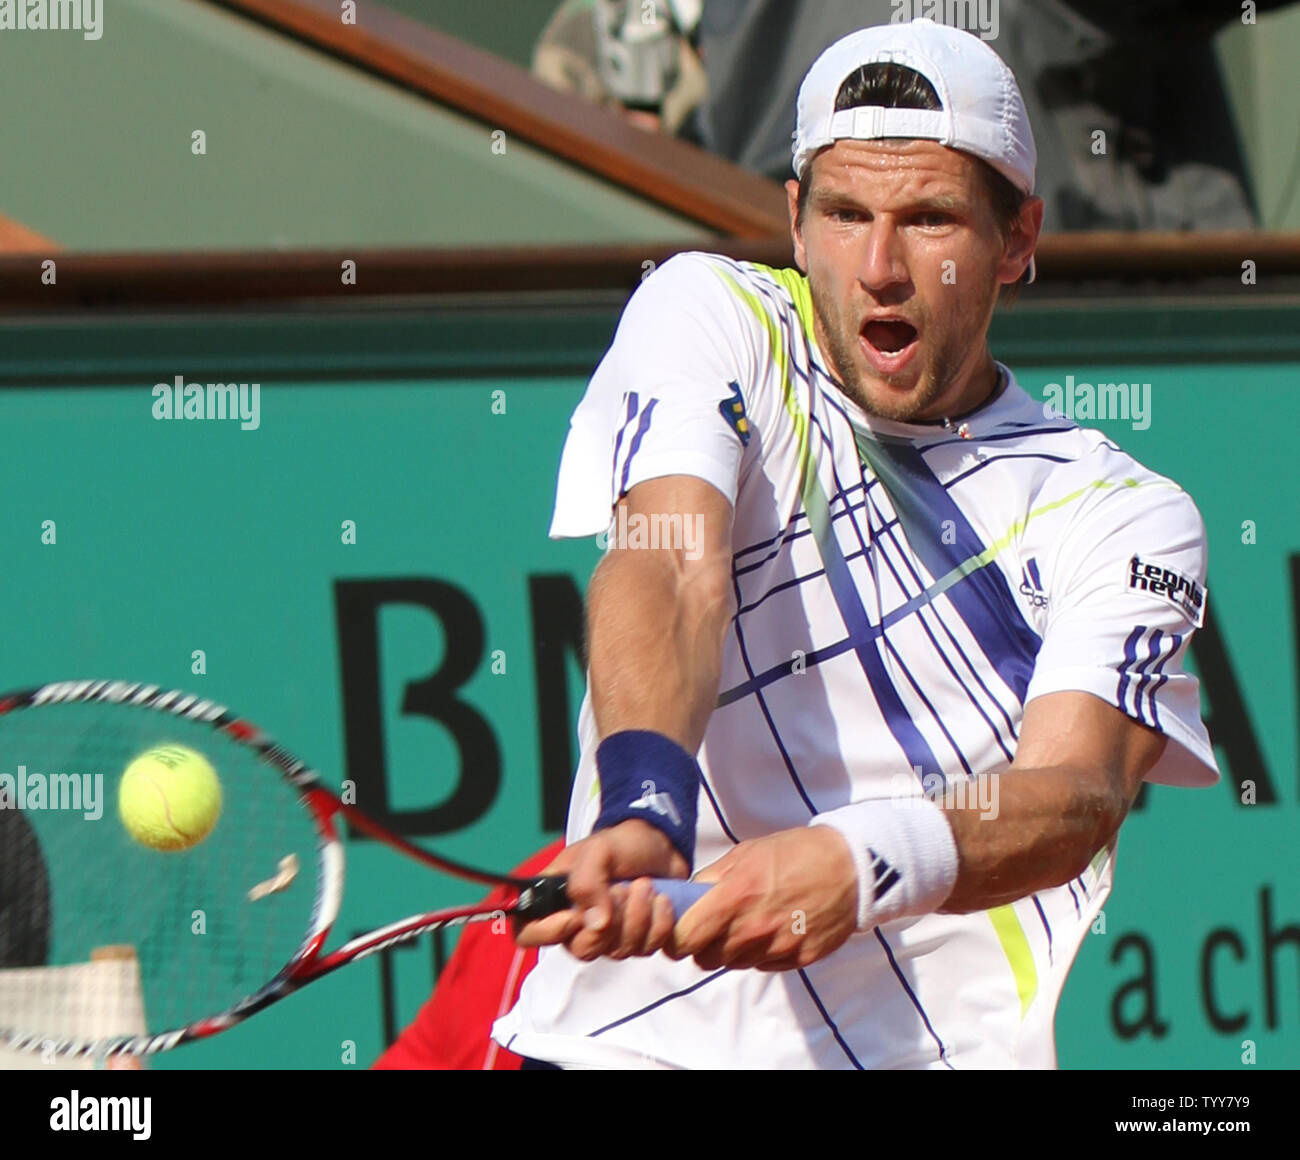 Austrian Jurgen Melzer hits a shot during his French Open semifinal match  against Spaniard Rafael Nadal